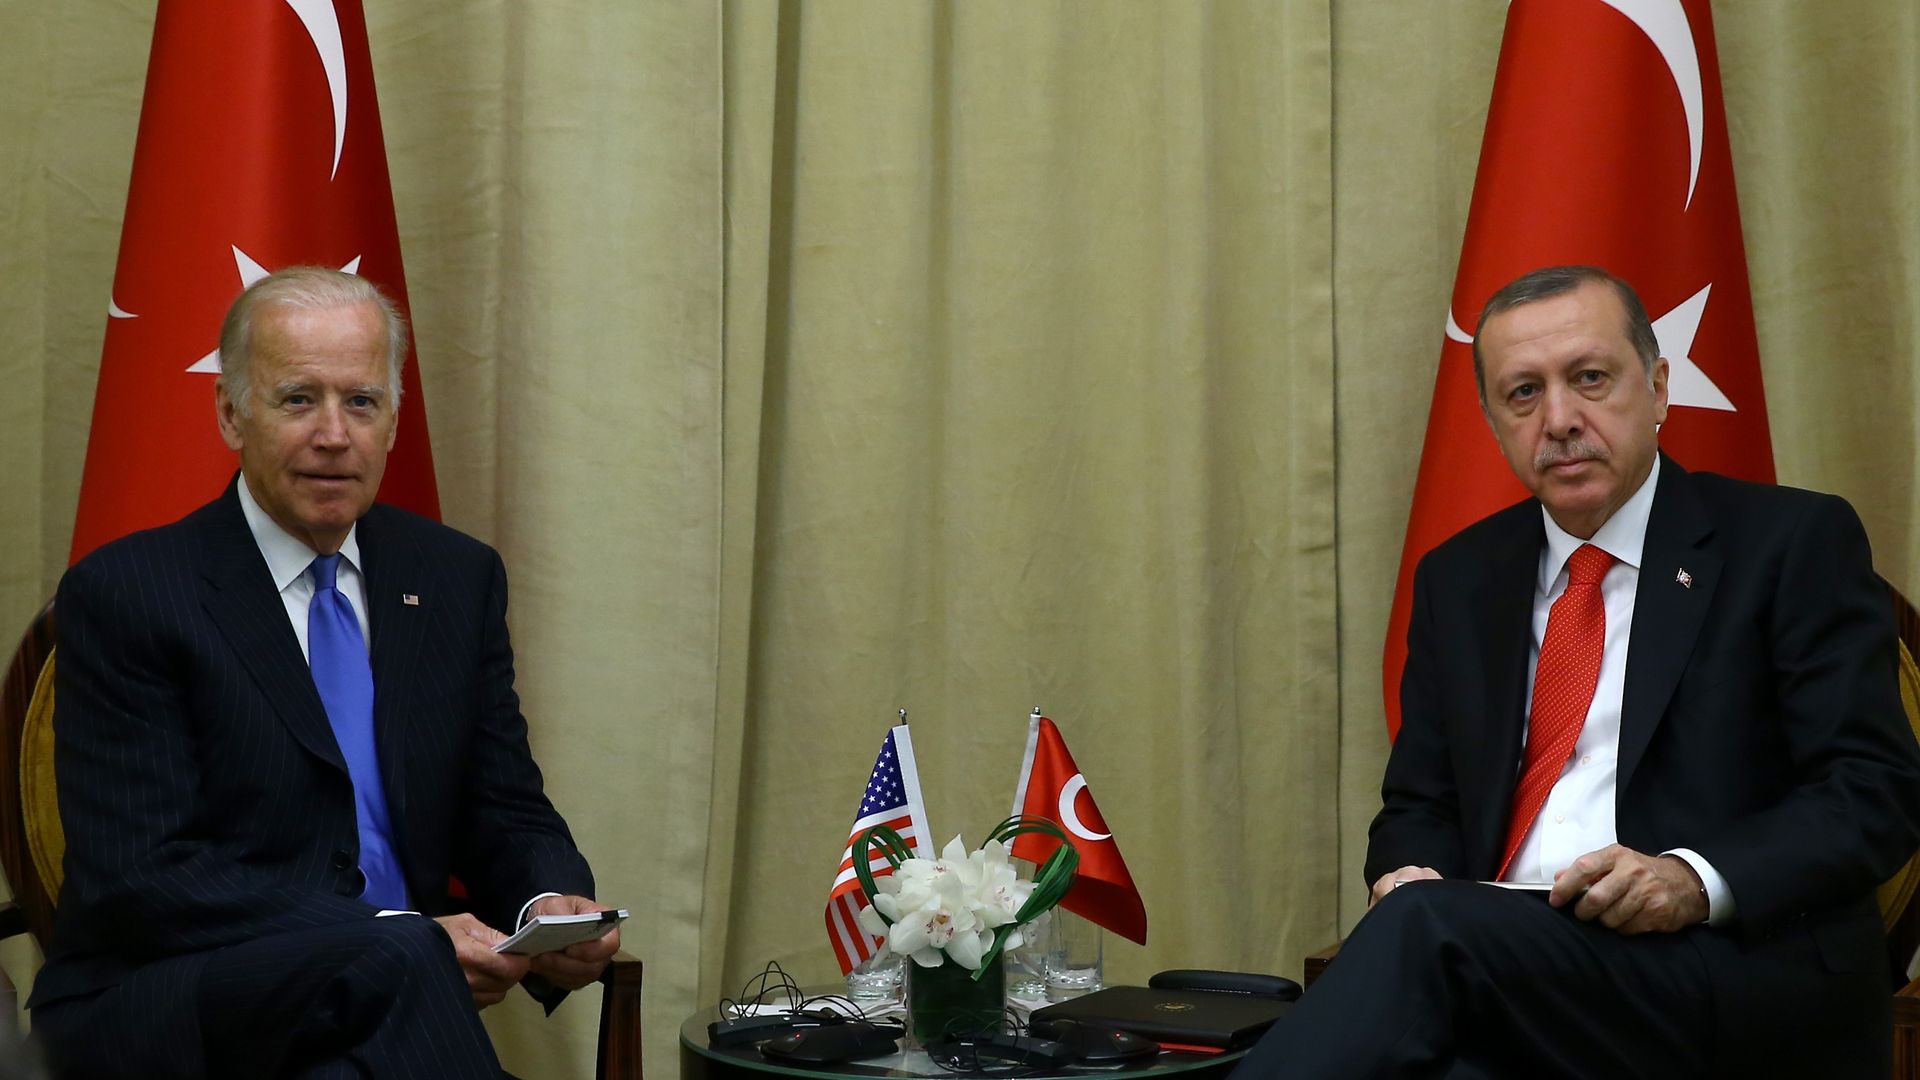 Then Vice President Biden meeting with Turkish President Recep Tayyip Erdogan in New York In September 2016.